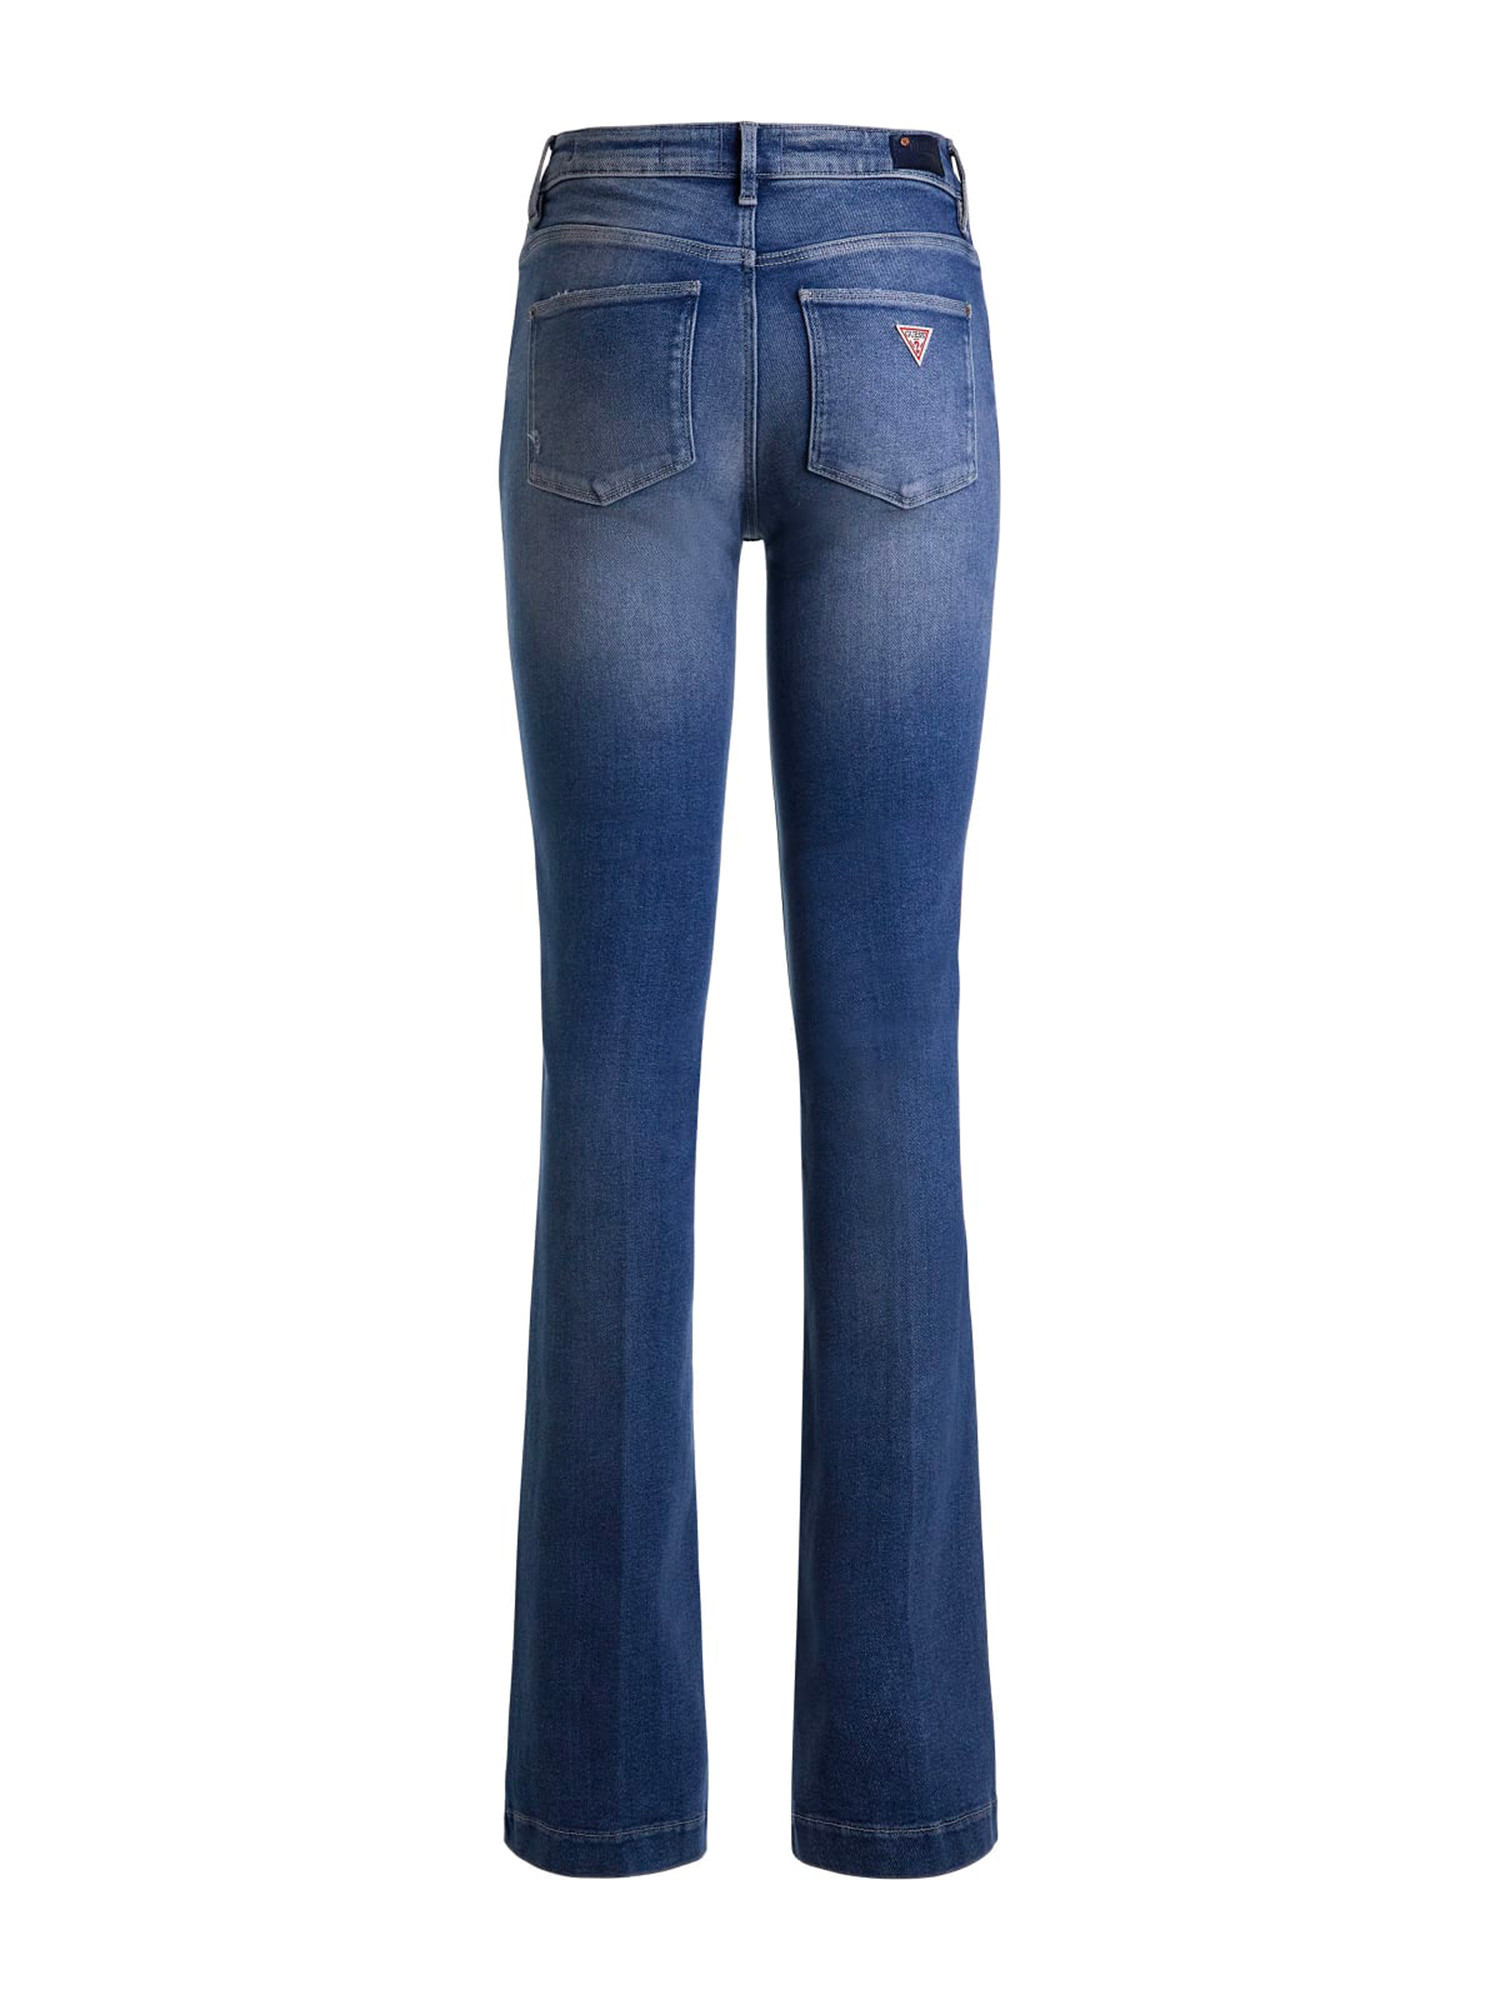 Guess - 5-pocket bootcut jeans, Dark Blue, large image number 2